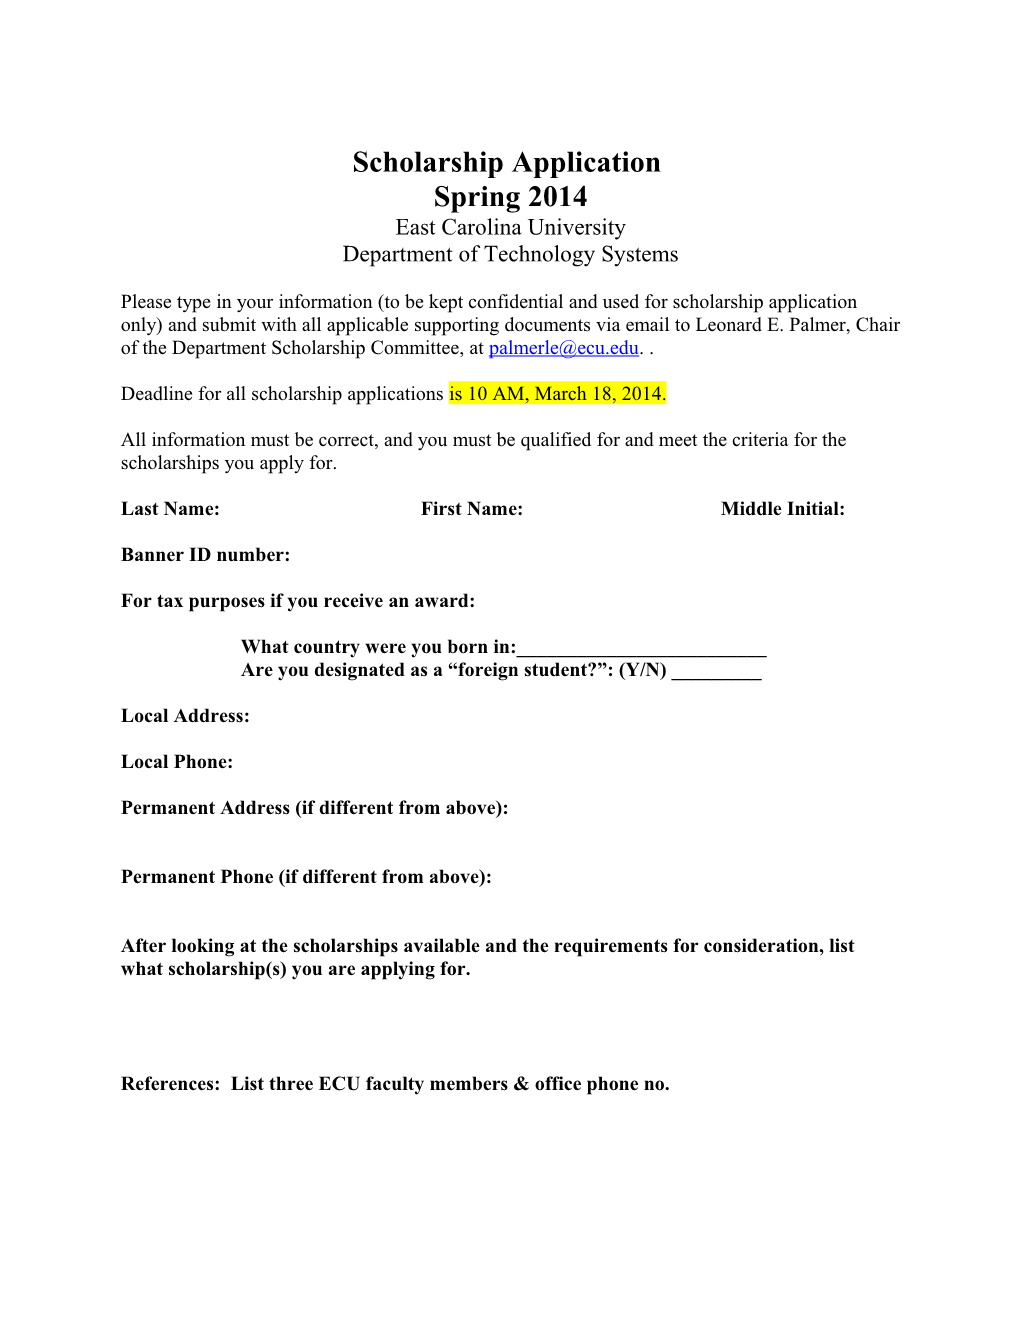 Scholarship Application Form s4